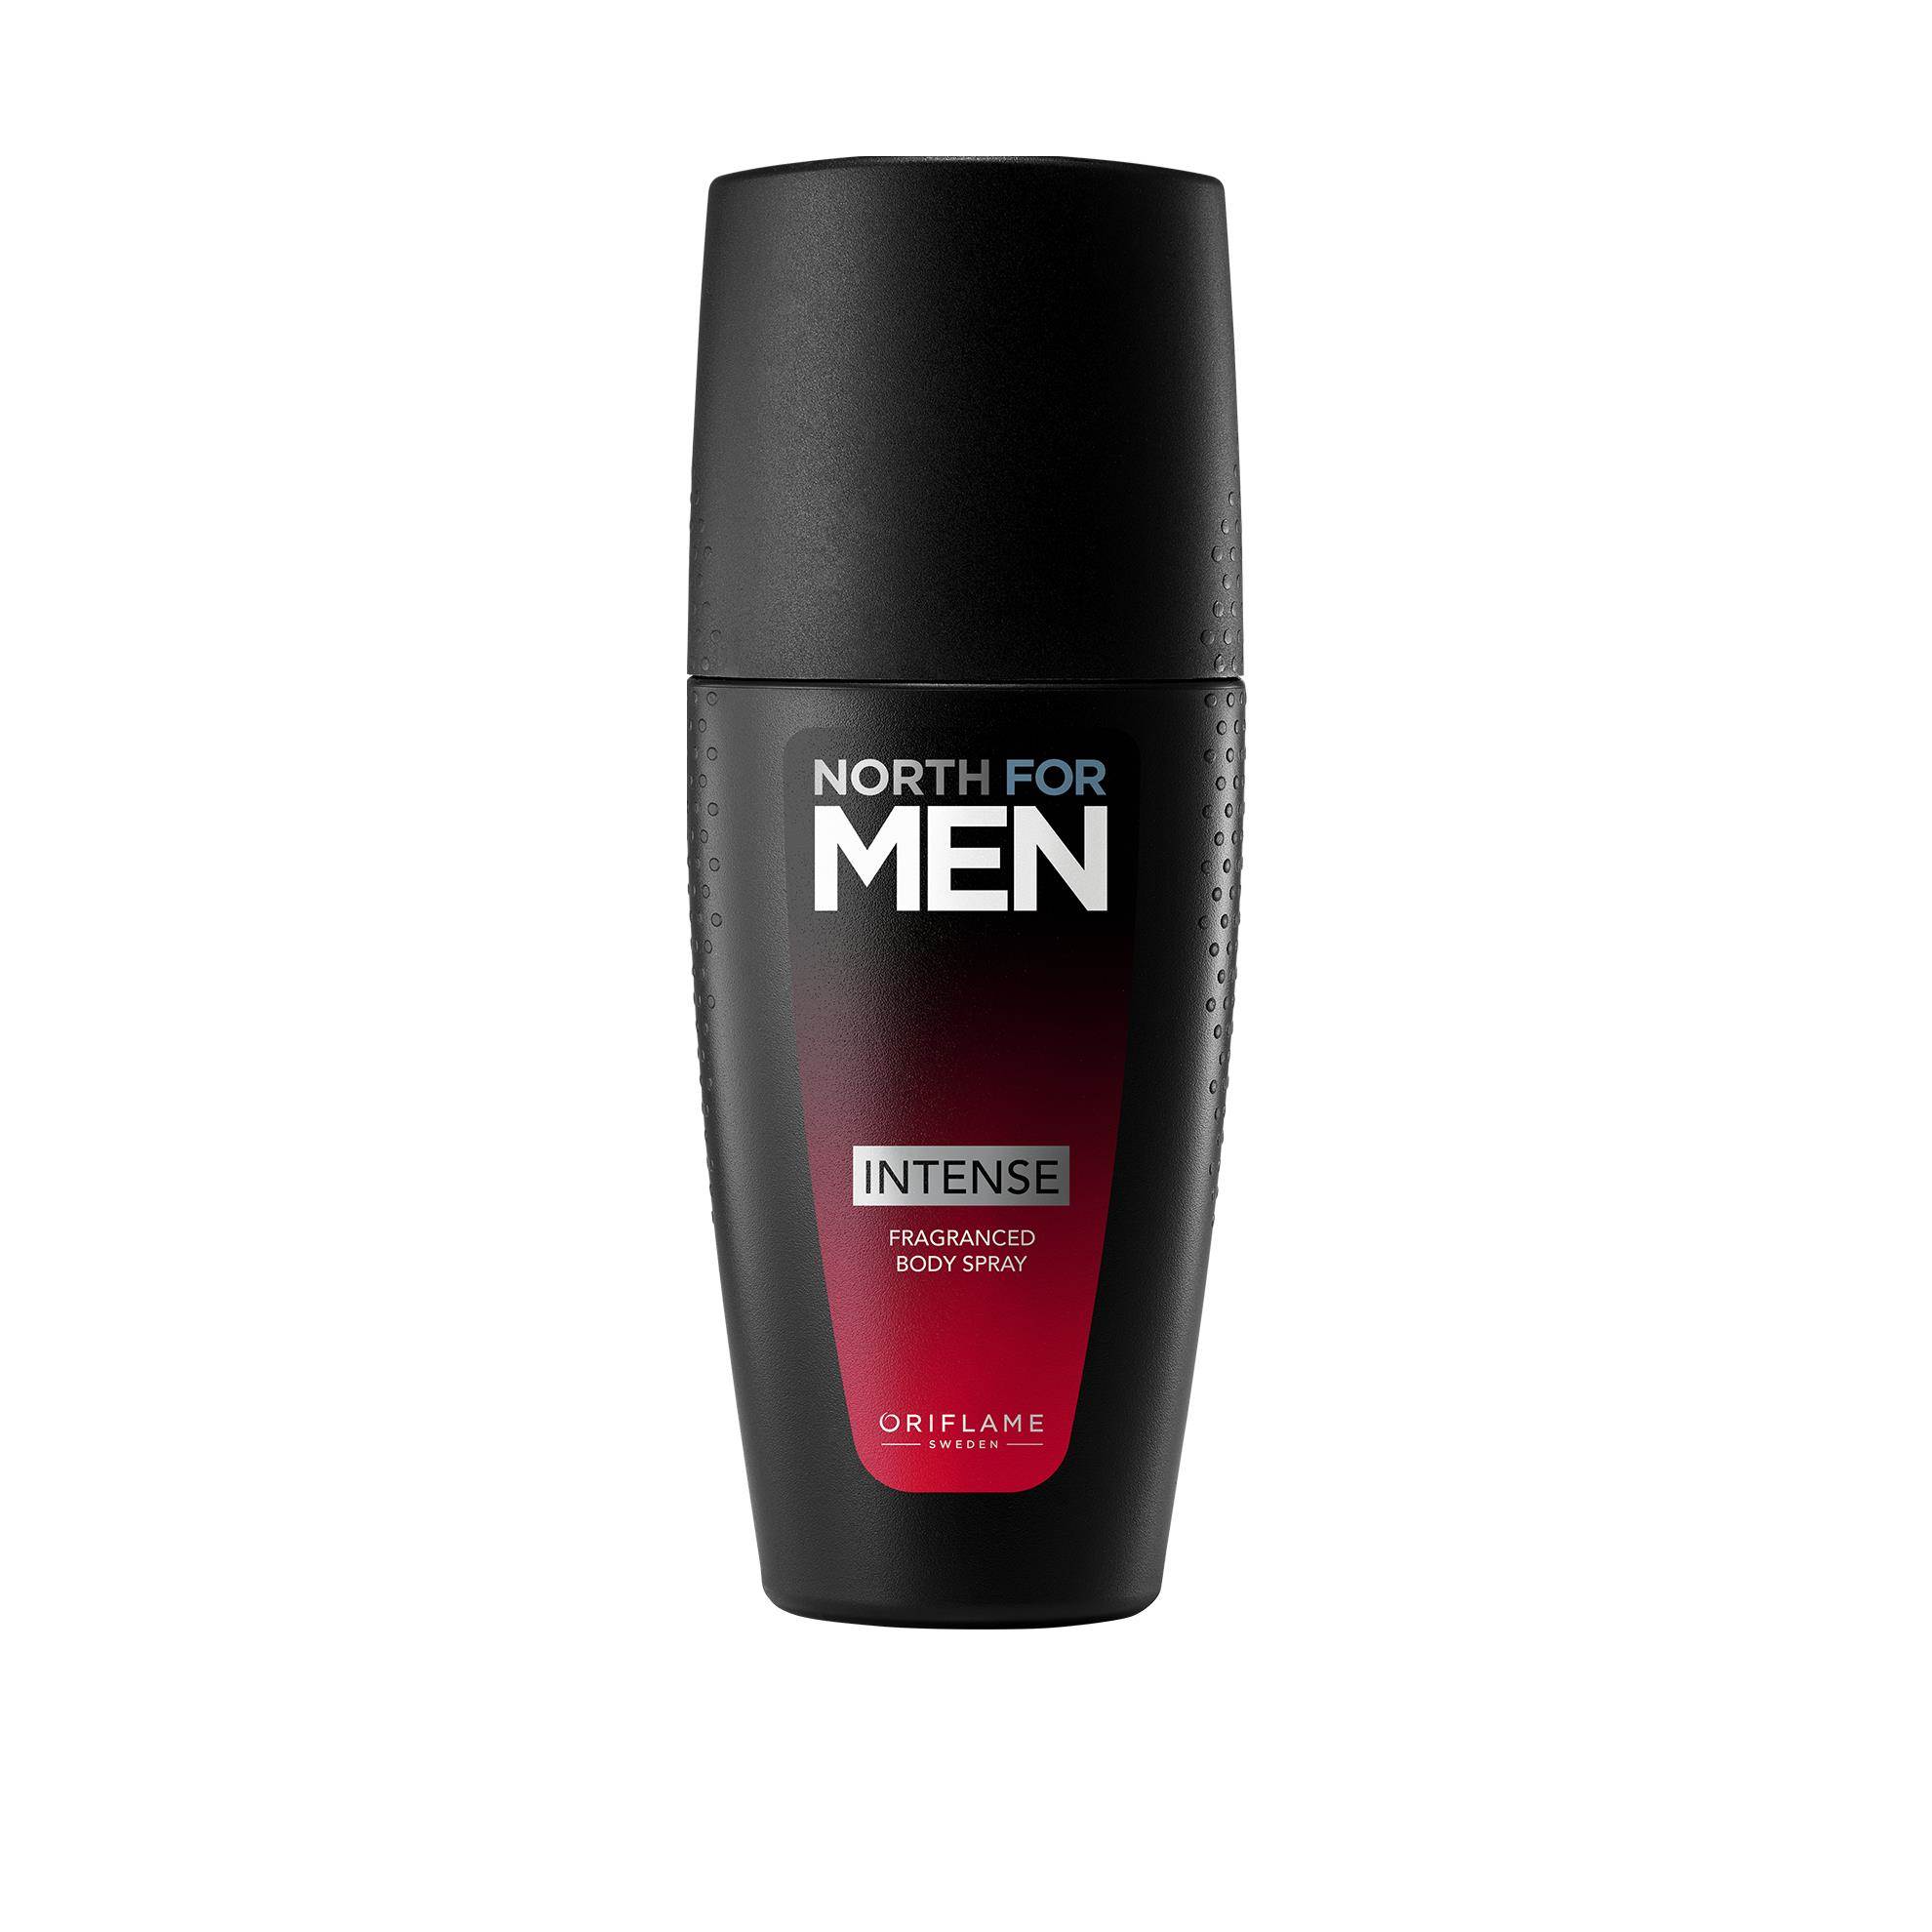 north-for-men-intense-fragranced-body-spray-1